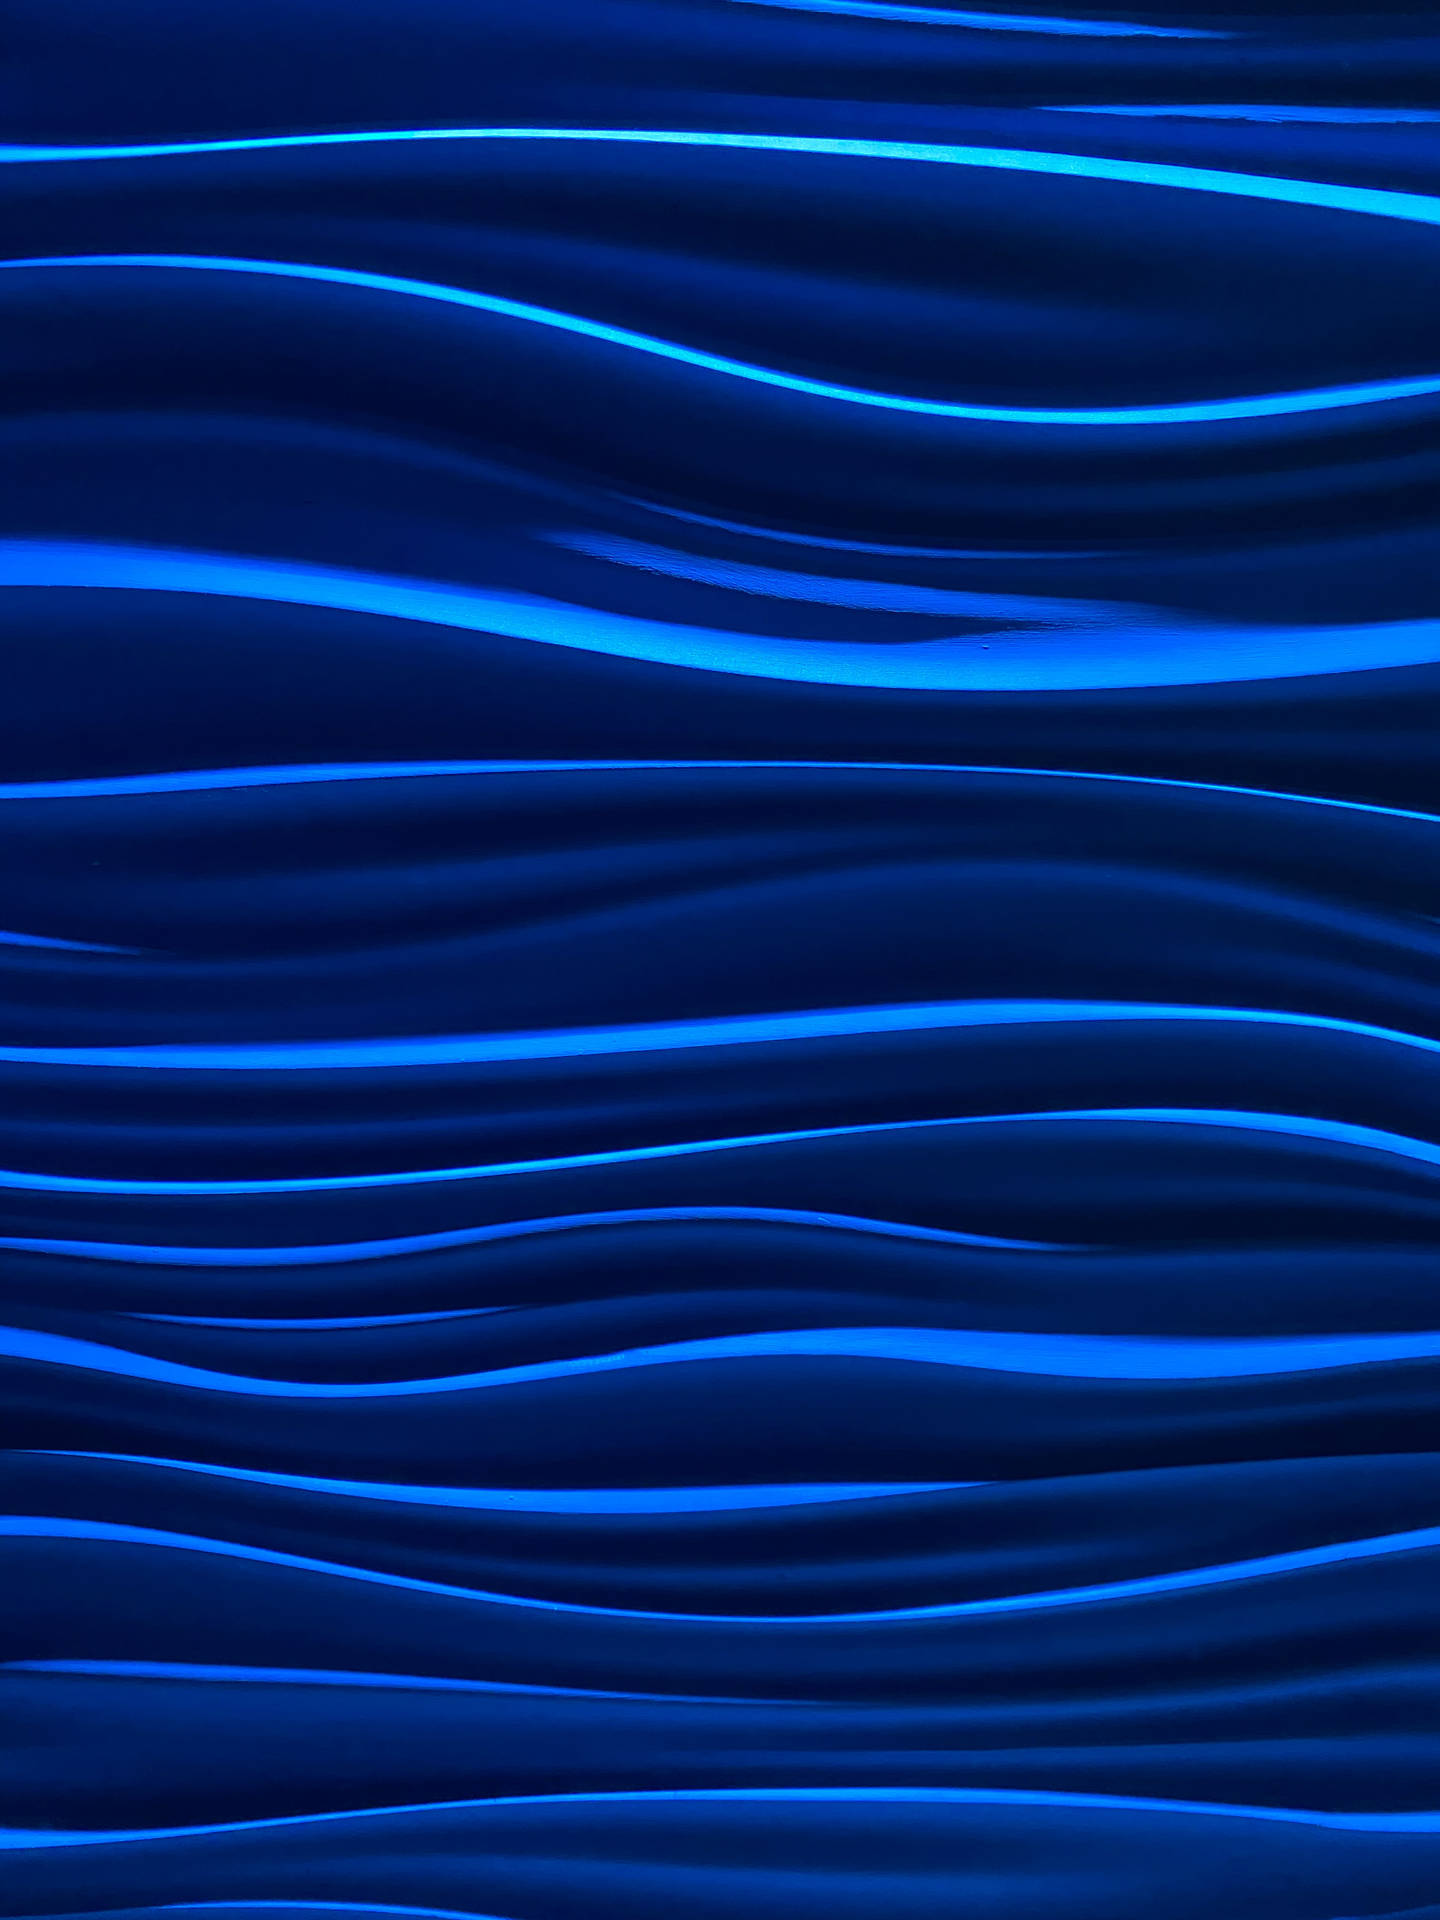 Blue Waves Aesthetic Pattern Wallpaper